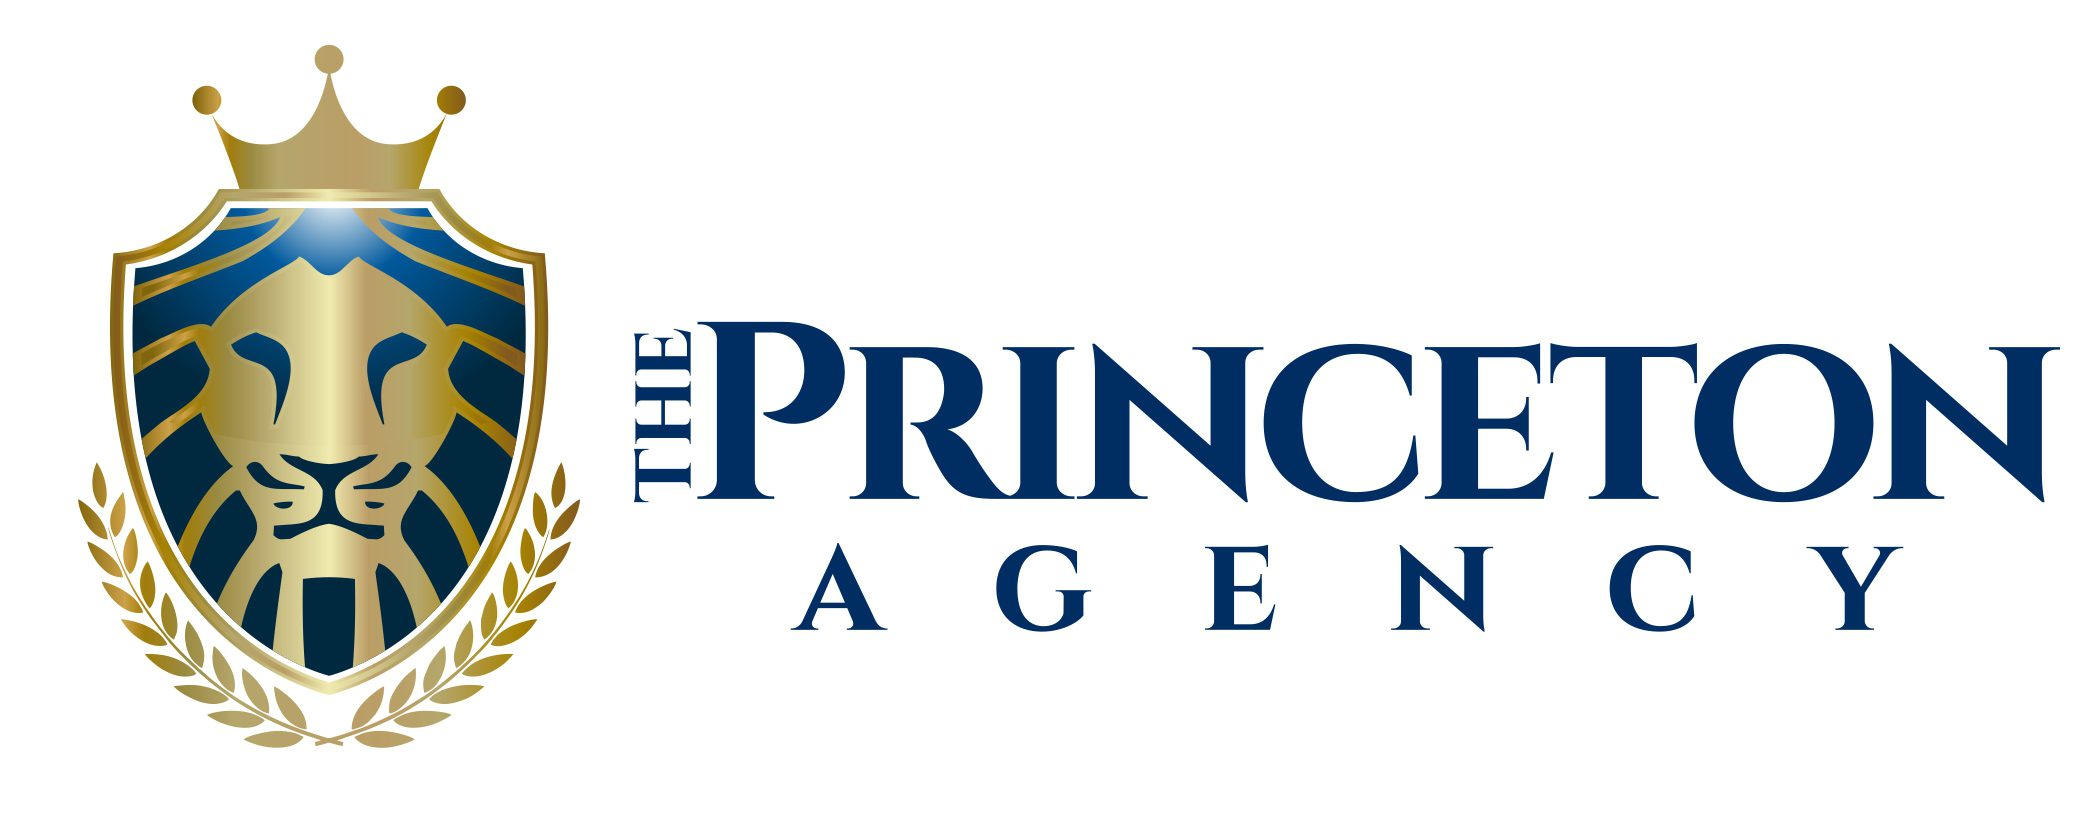 The Princeton Insurance Agency logo 2